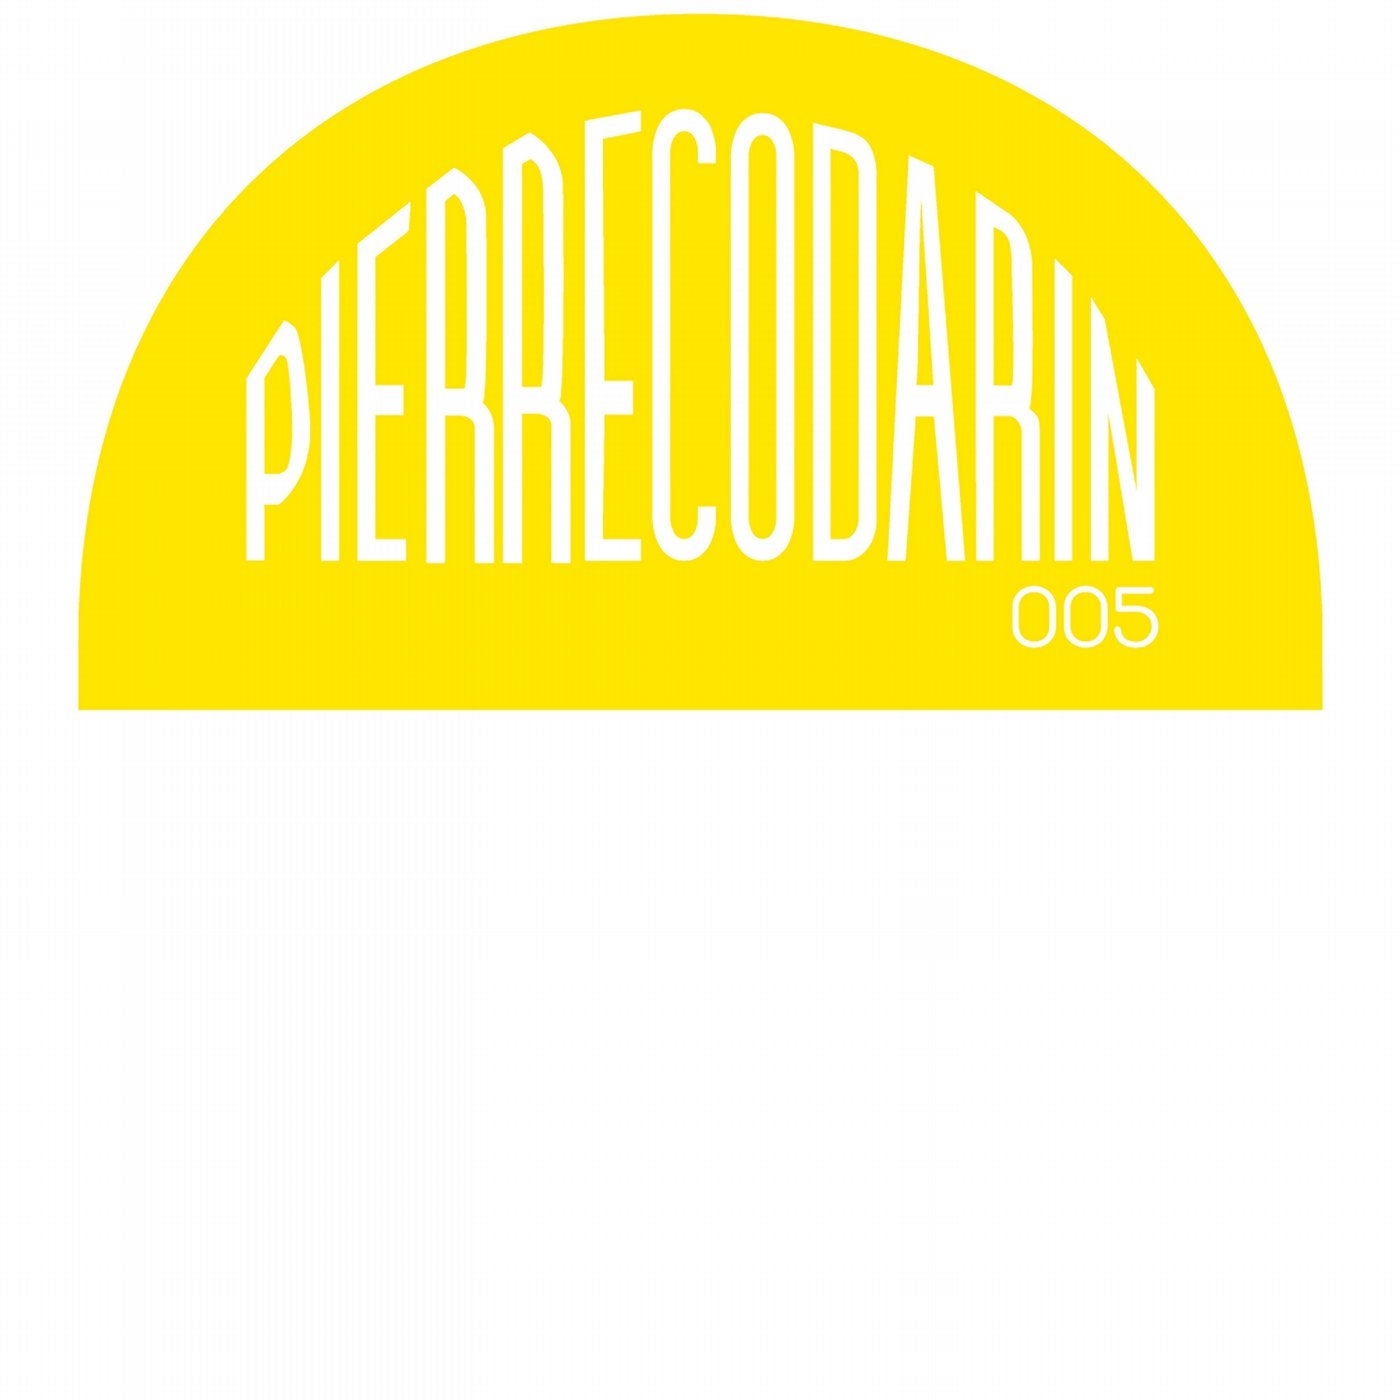 Pierre Codarin 005